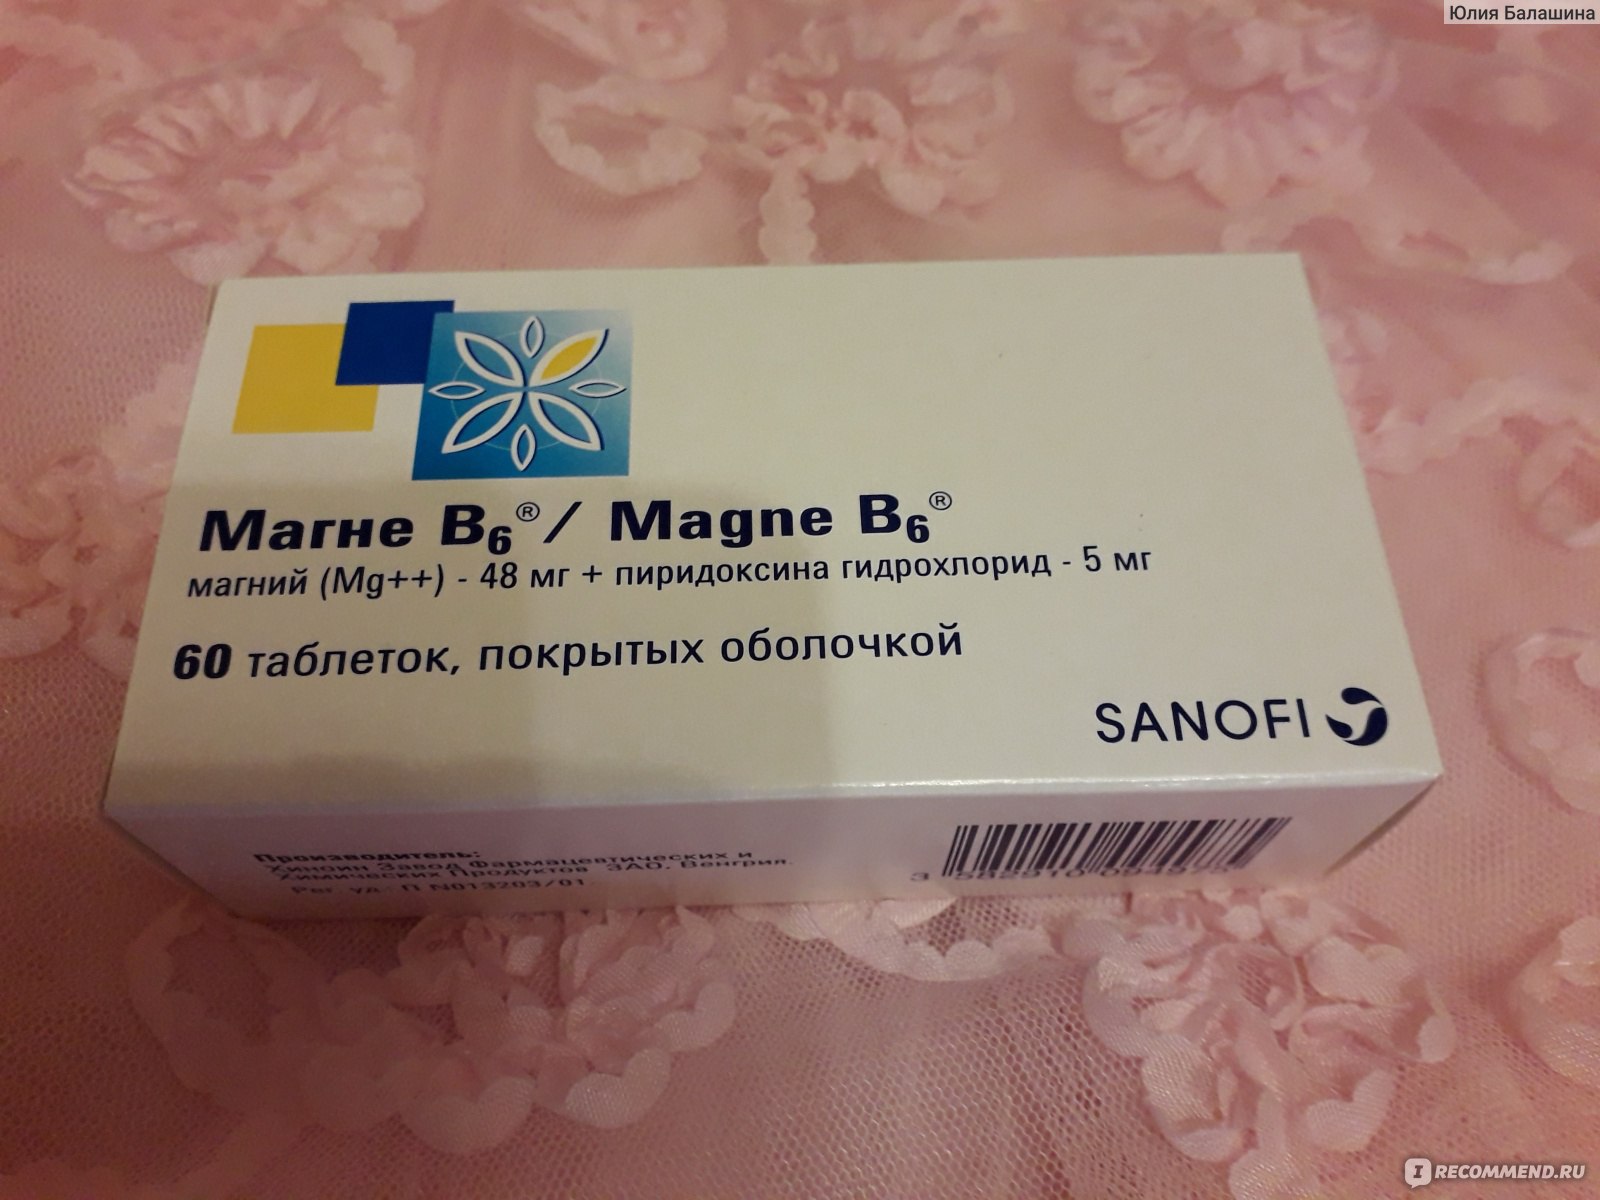 Магний б 6 его польза и вред. Магне б6 500мг. Магне б6 витамины. Магний + магний в6. Магний б6 Sanofi.